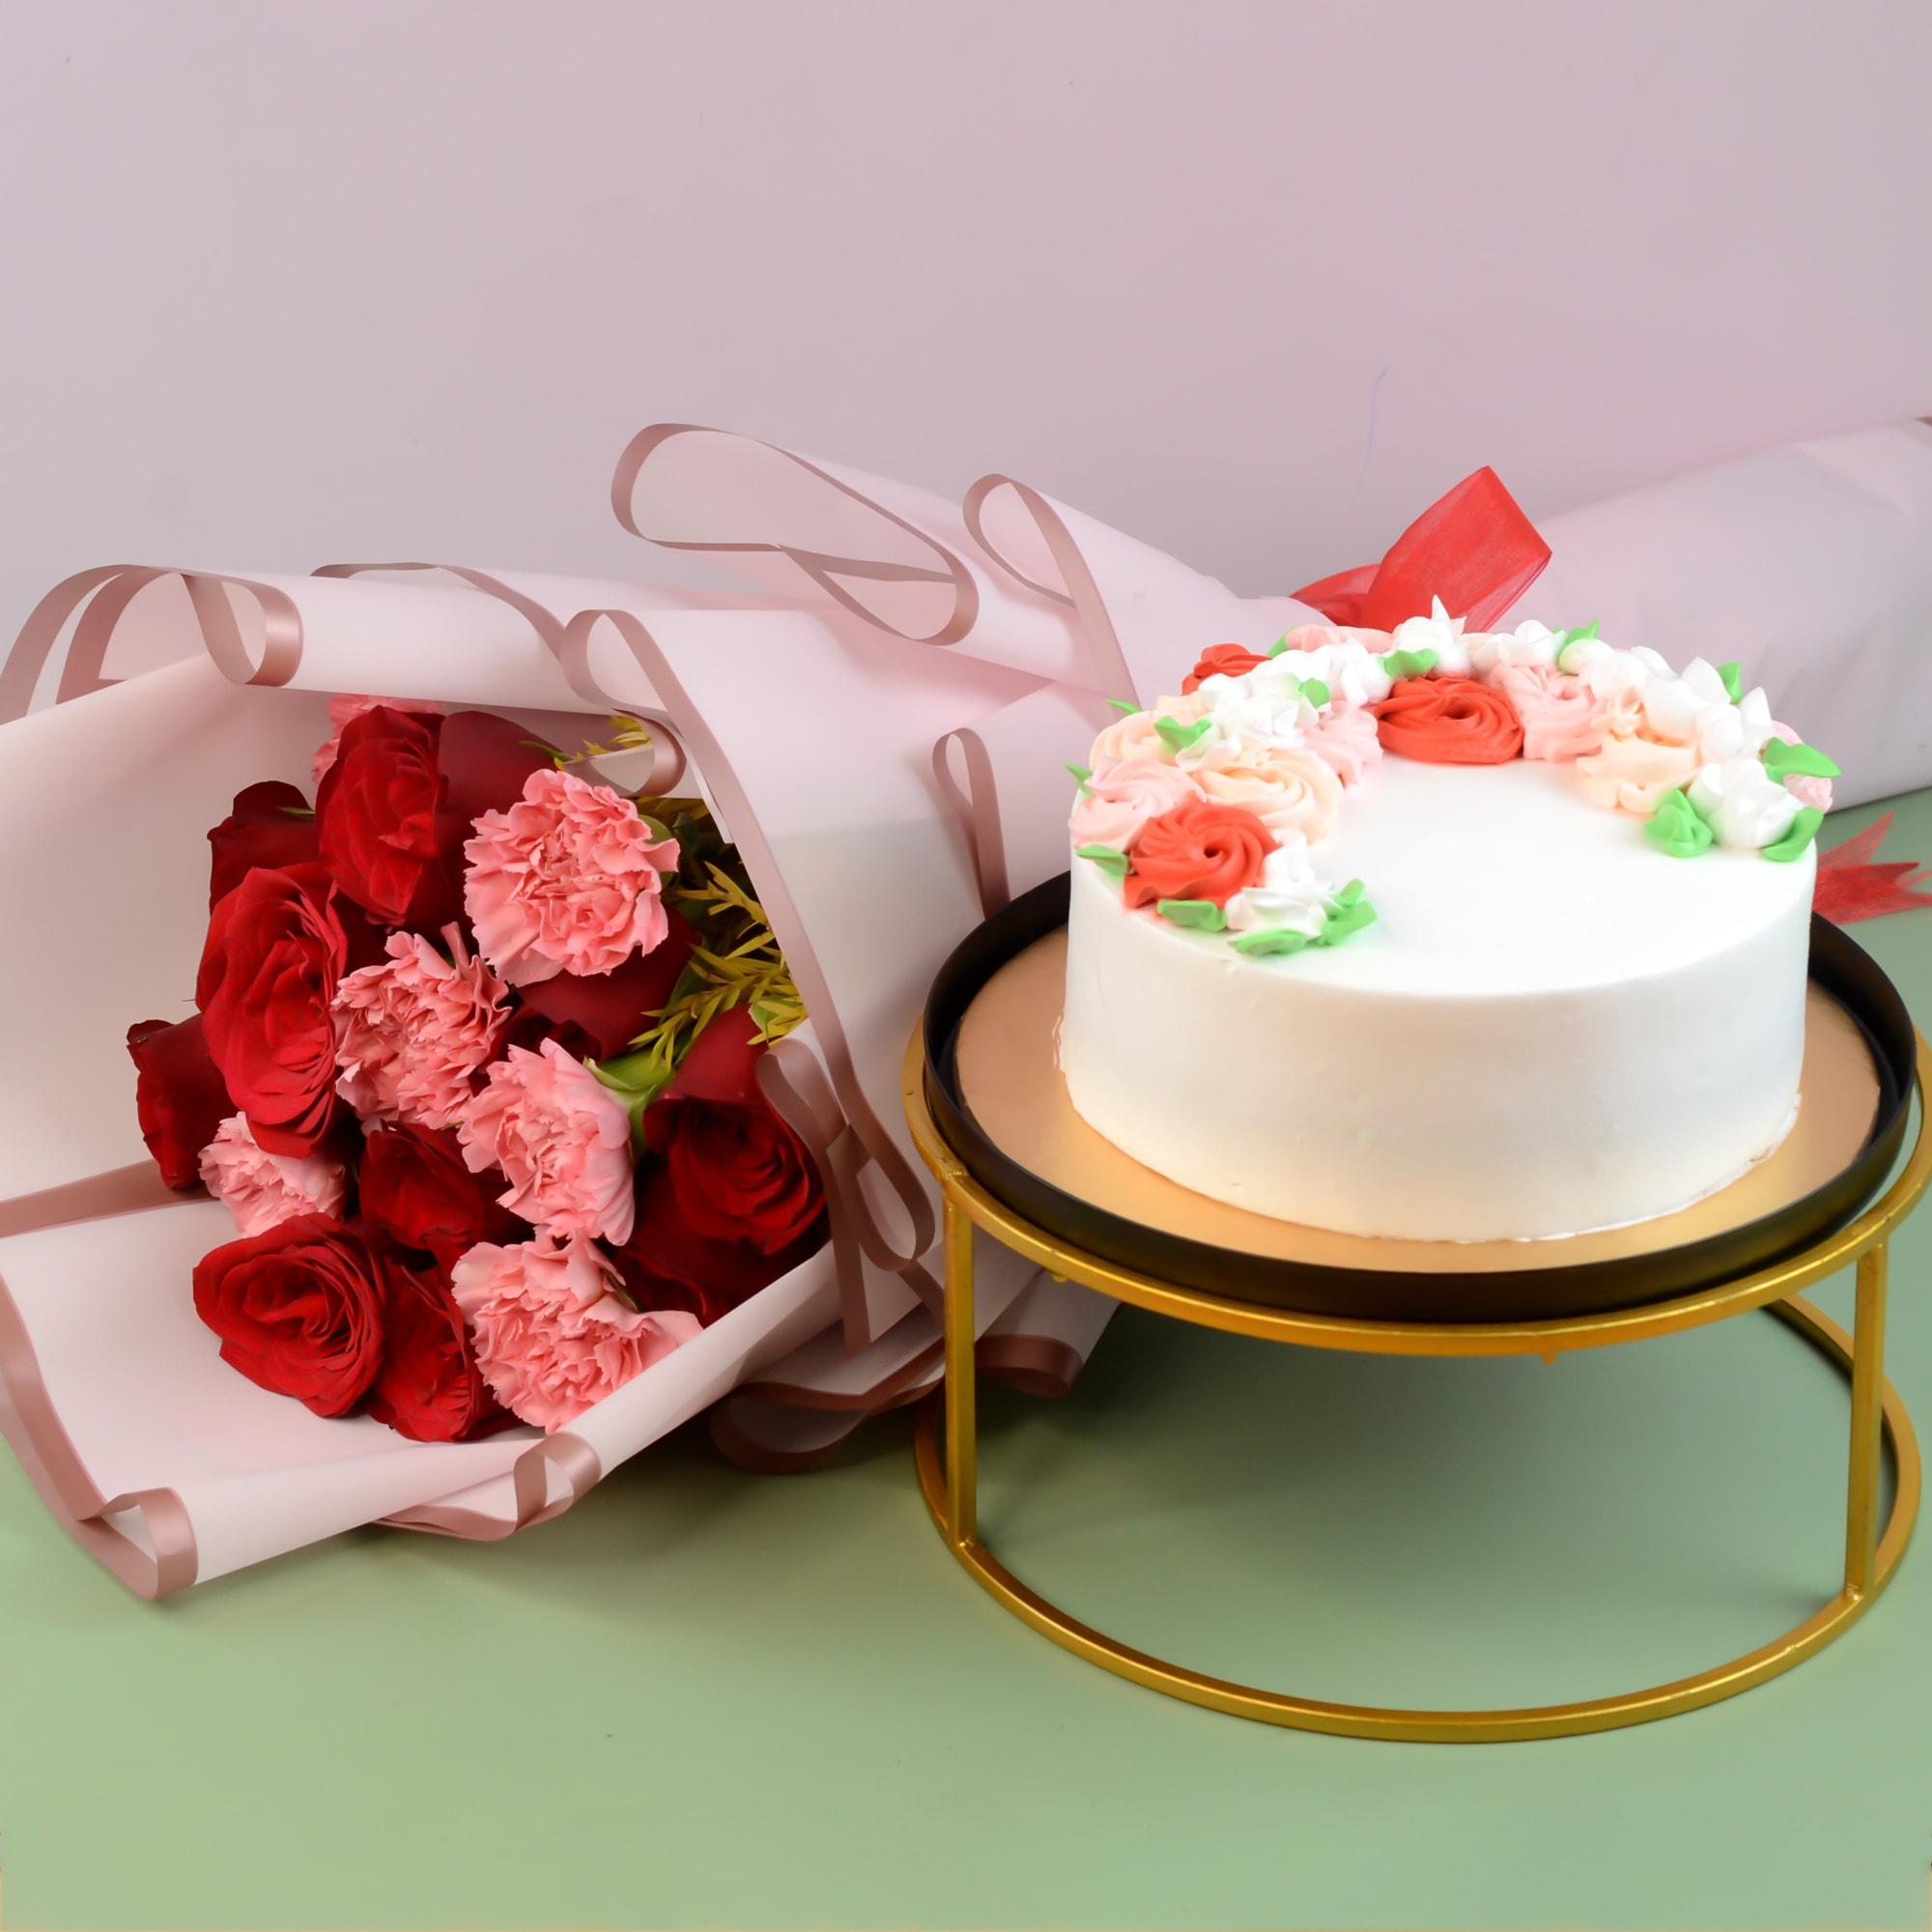 Birthday Present Cake Recipe - BettyCrocker.com